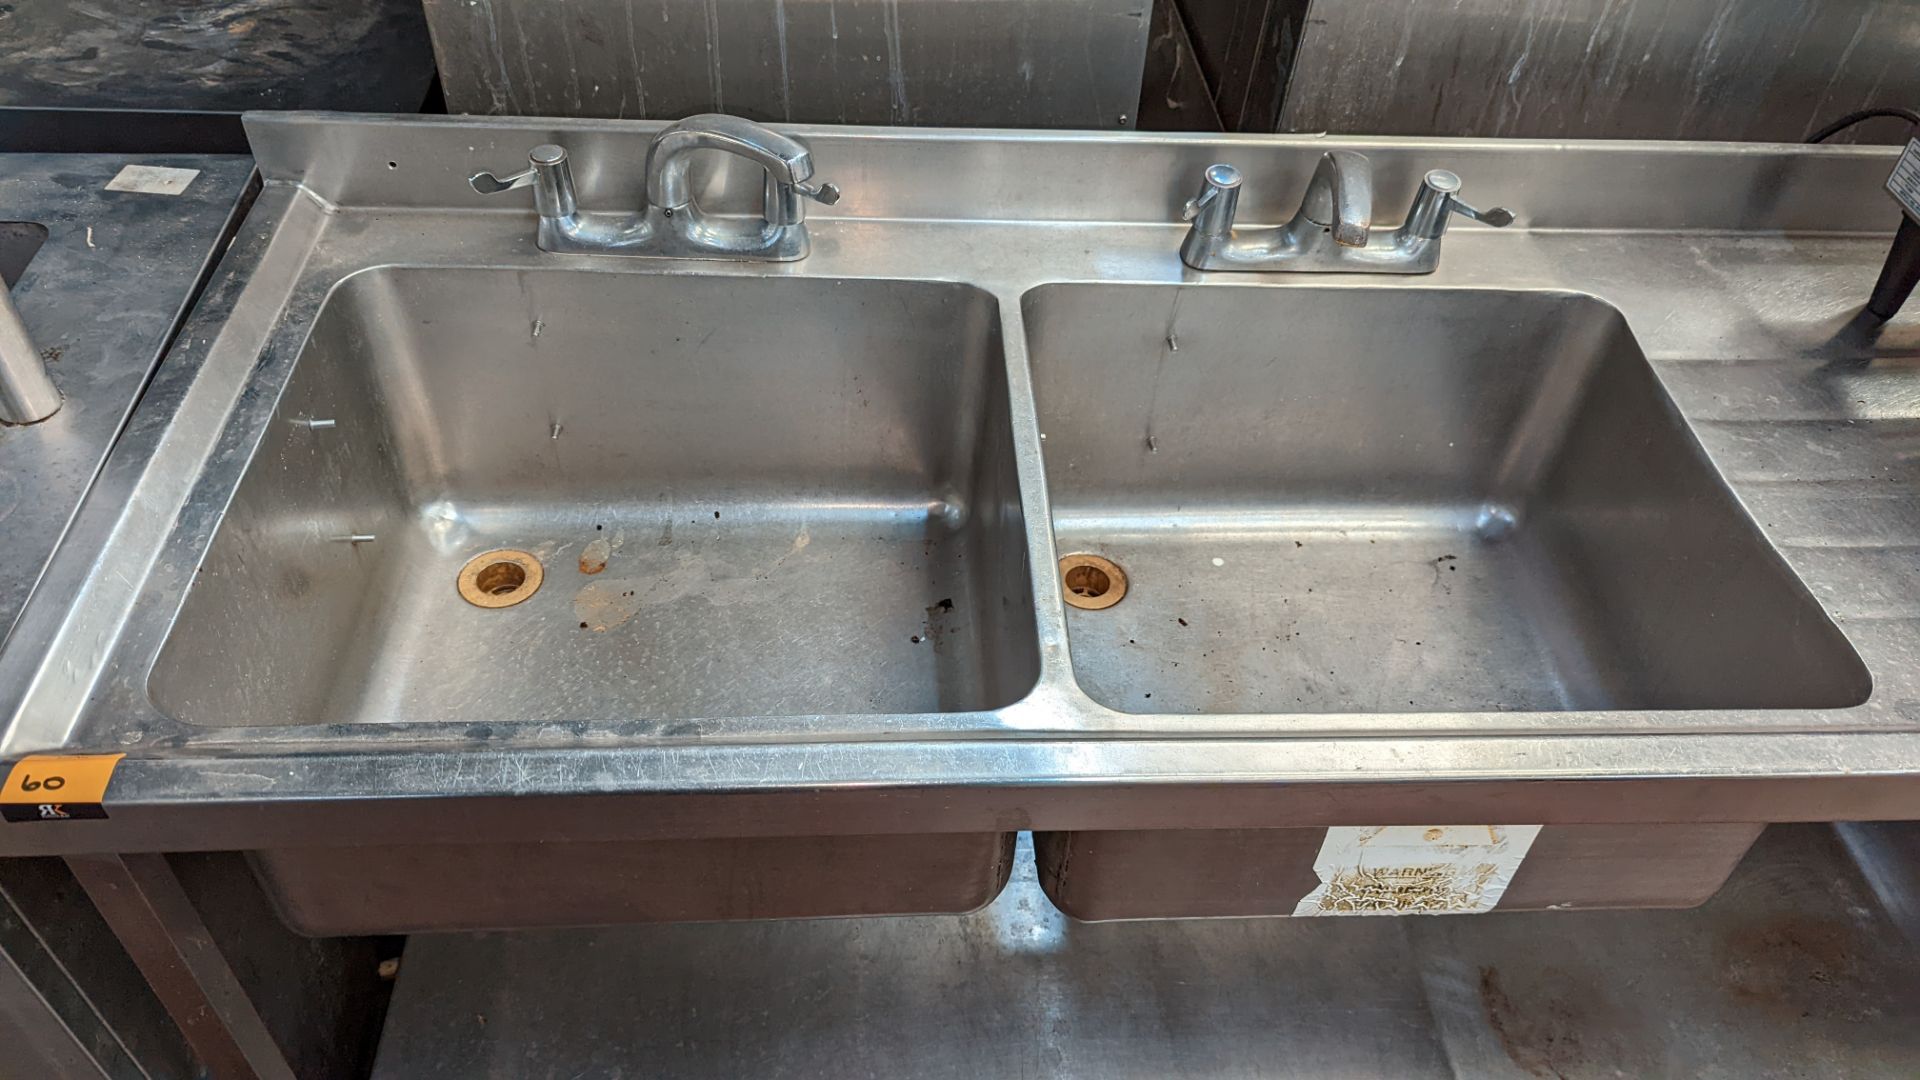 Stainless steel twin bowl sink arrangement incorporating mixer taps, drainer & shelf below - Image 4 of 4